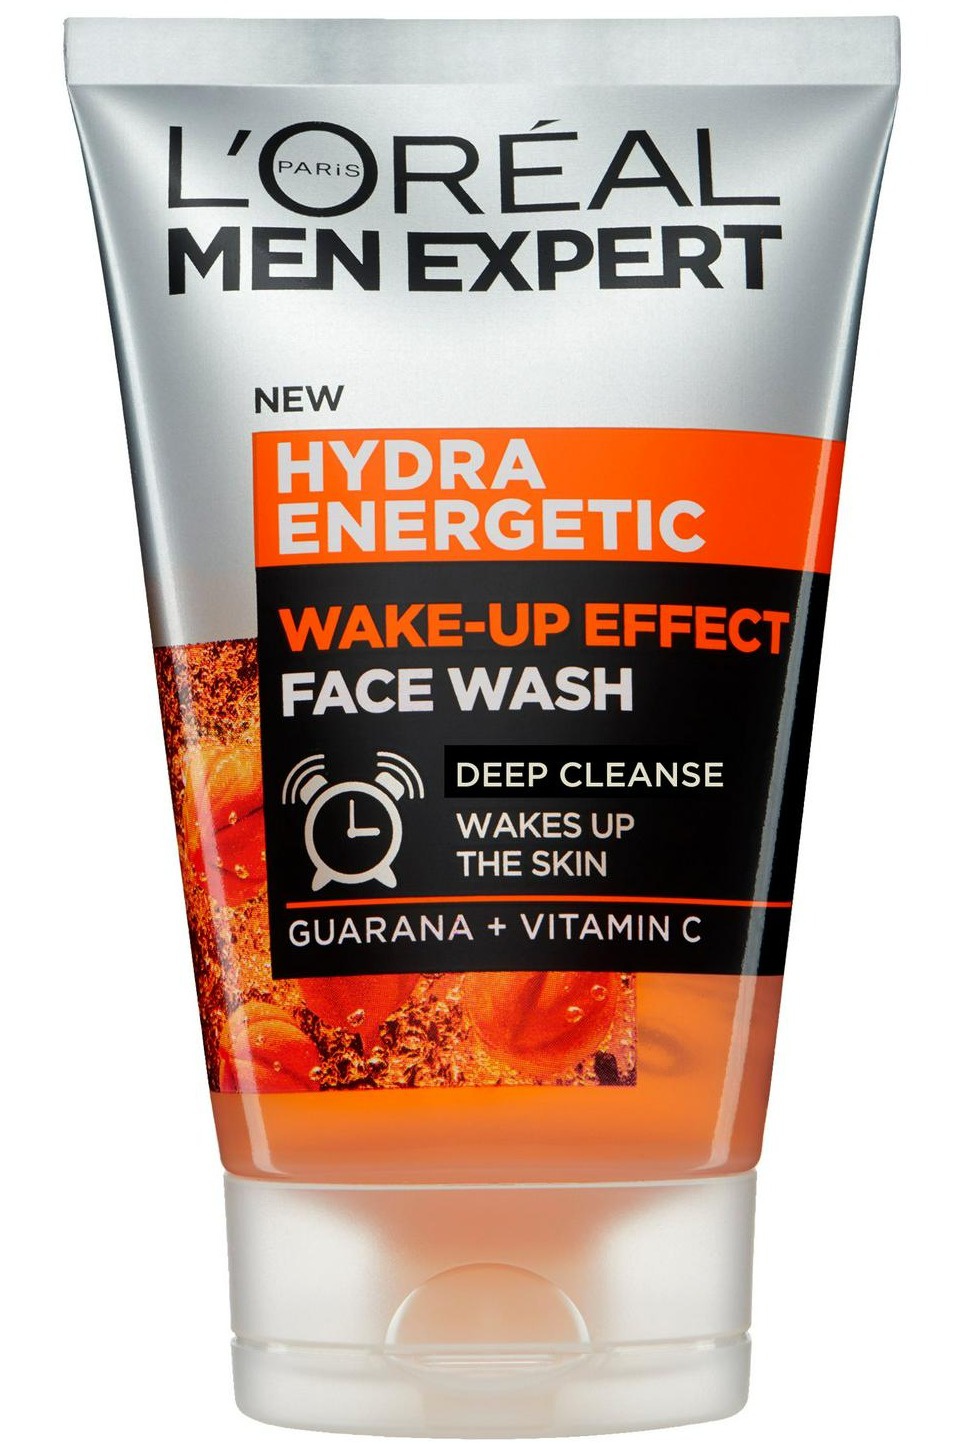 L'Oreal Men Expert Hydra Energetic Wake Up Effect Facewash